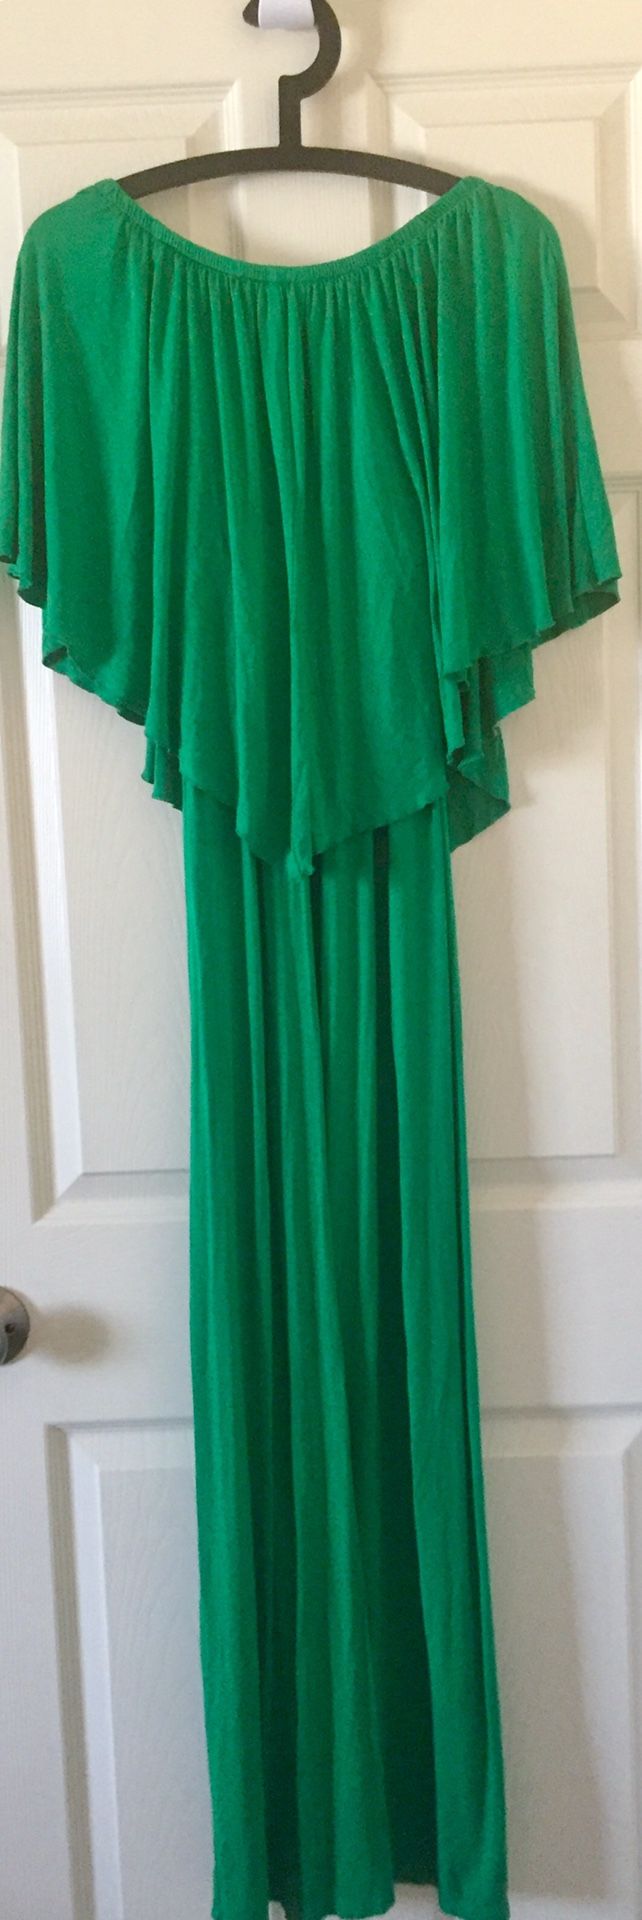 Green DRESS Size S